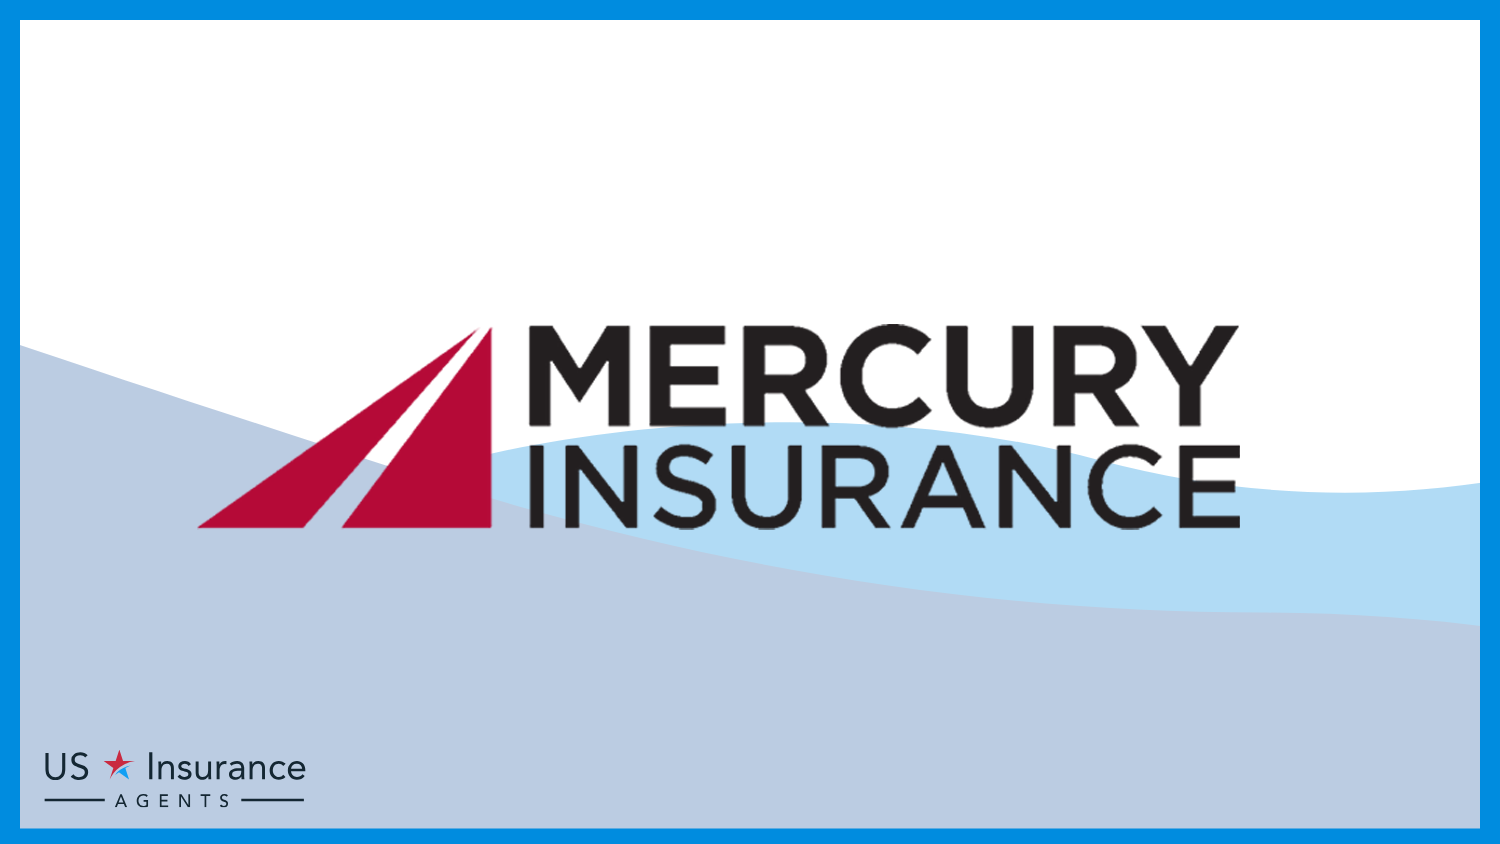 Mercury Insurance: Best Business Insurance for Bloggers